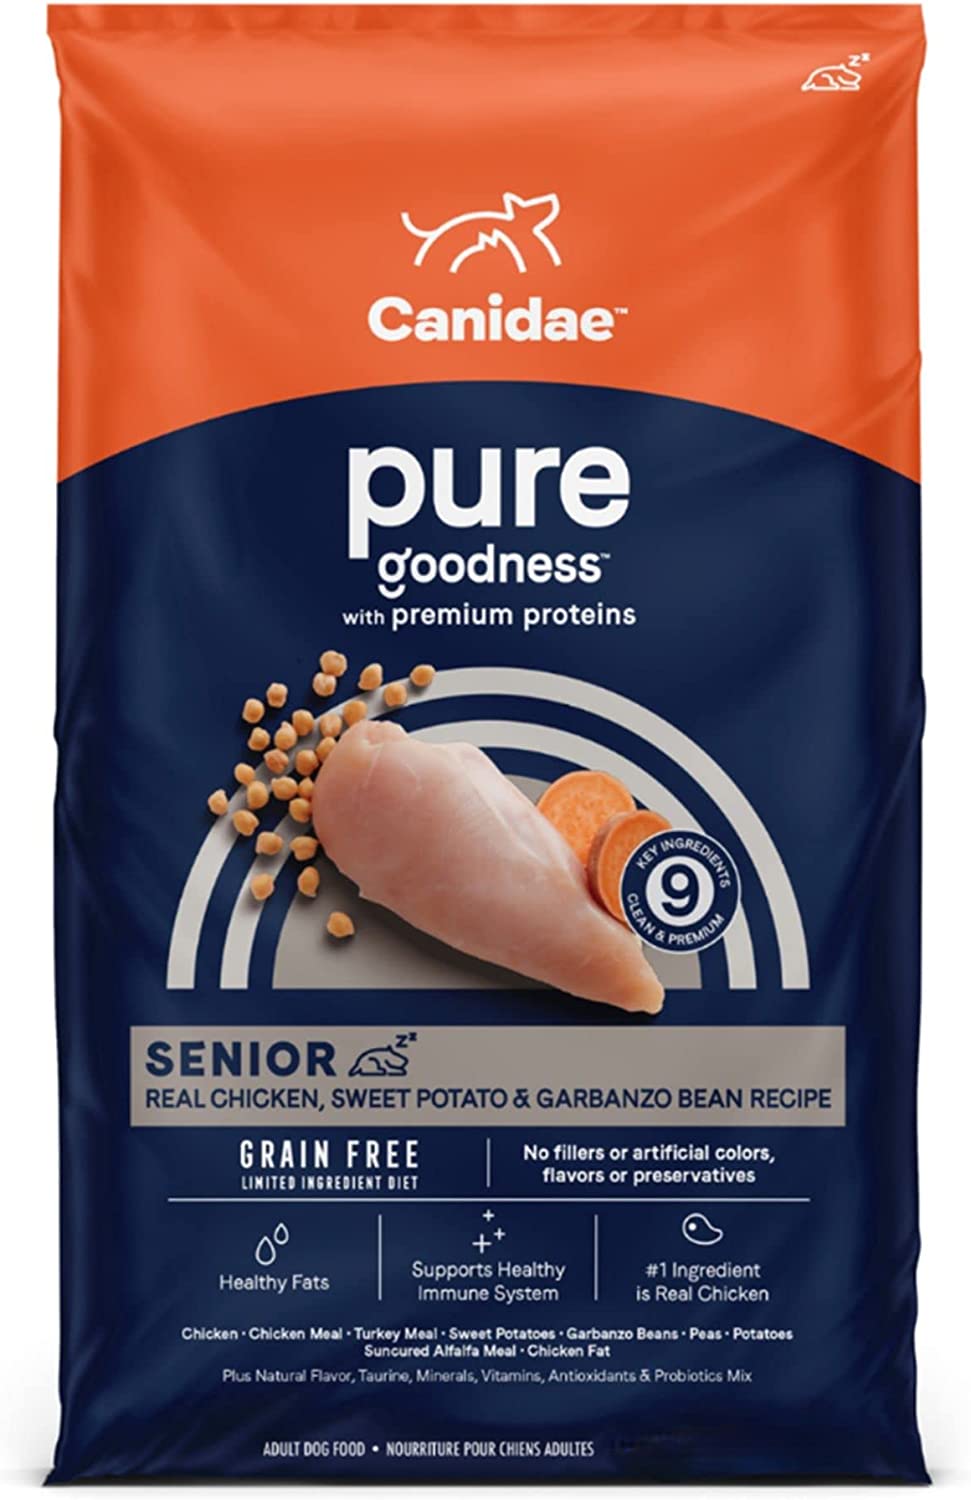 Canidae PURE Beperkt ingrediënt Senior Hondenvoer, Kip, Zoete Aardappel &Garbanzo Bean Recept